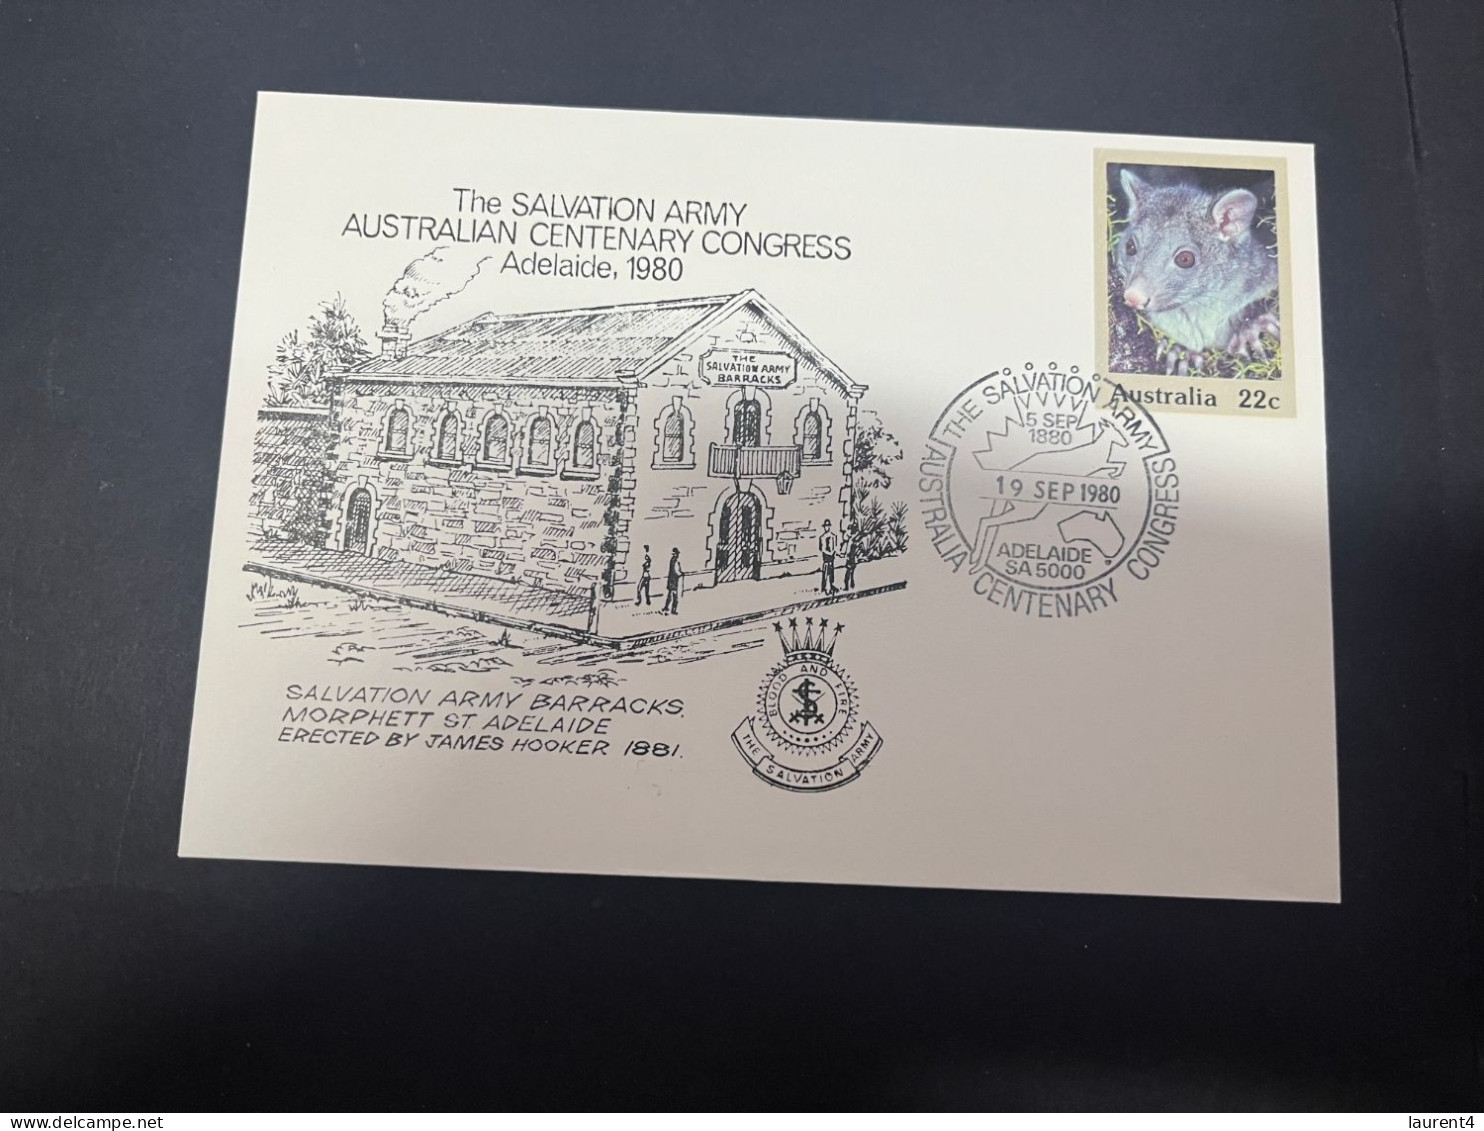 2-5-2024 (3 Z 39) Australia FDC (1 Covers) 1980 - Salvation Army Australian Centenary Congress In Adelaide (Brushtail) - Primo Giorno D'emissione (FDC)